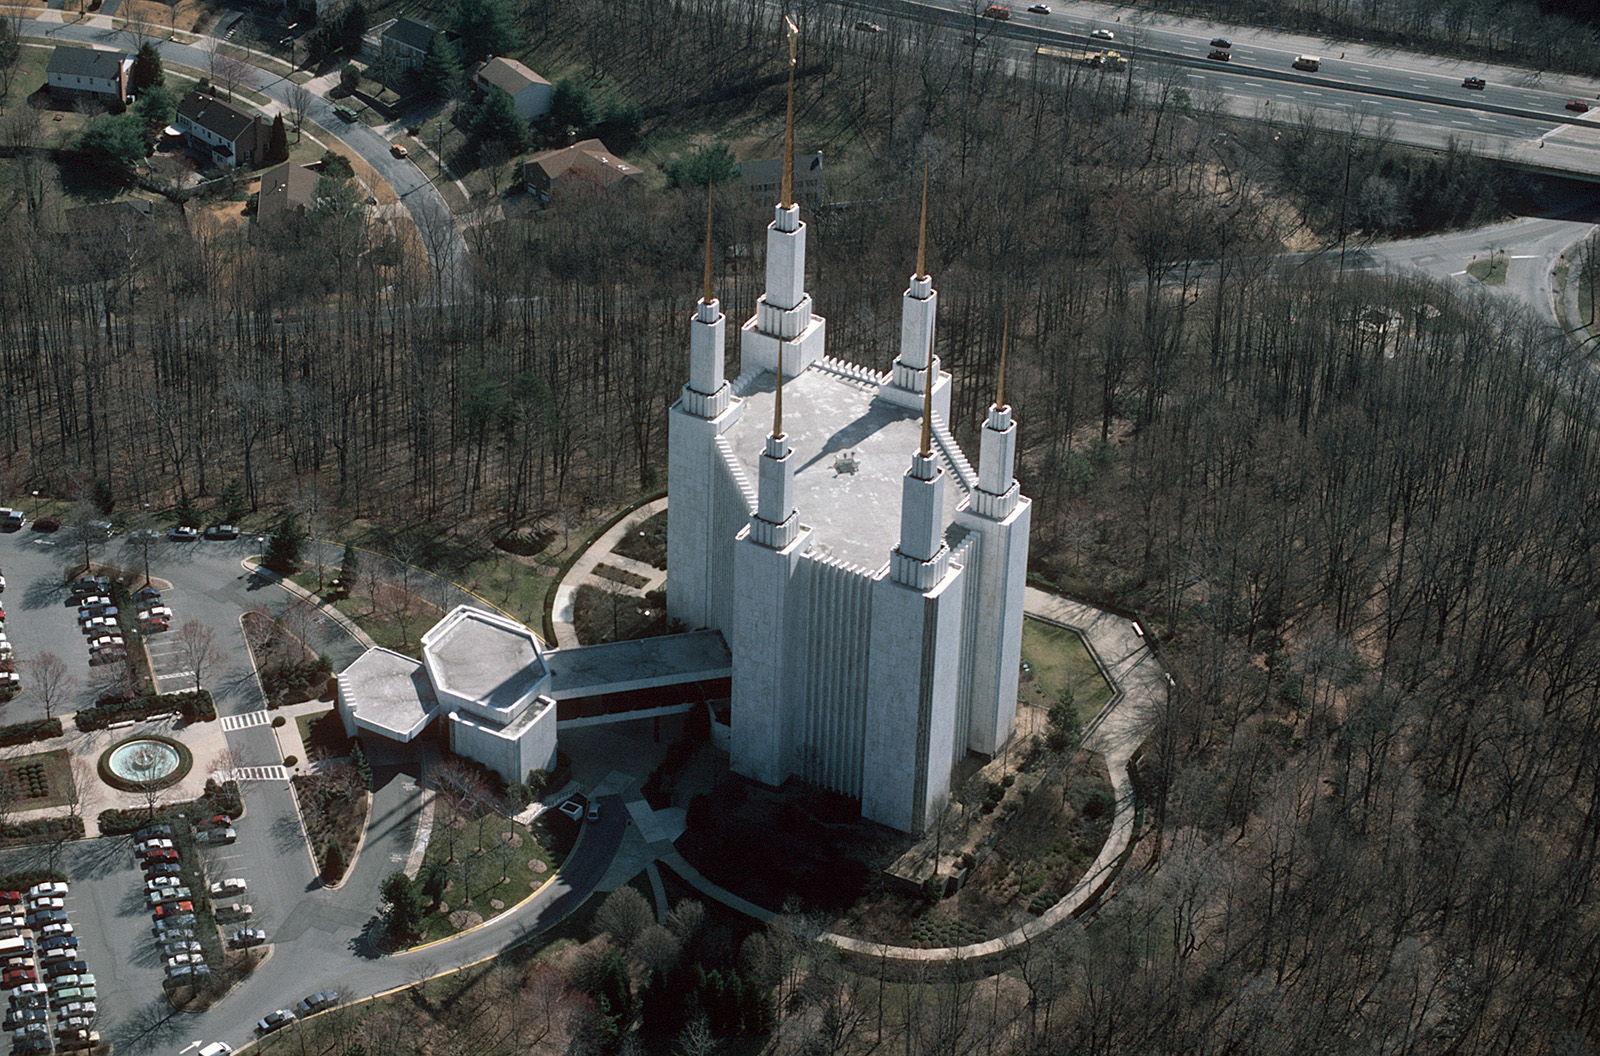 Renovations complete, Washington's LDS temple provides rare public glimpse inside